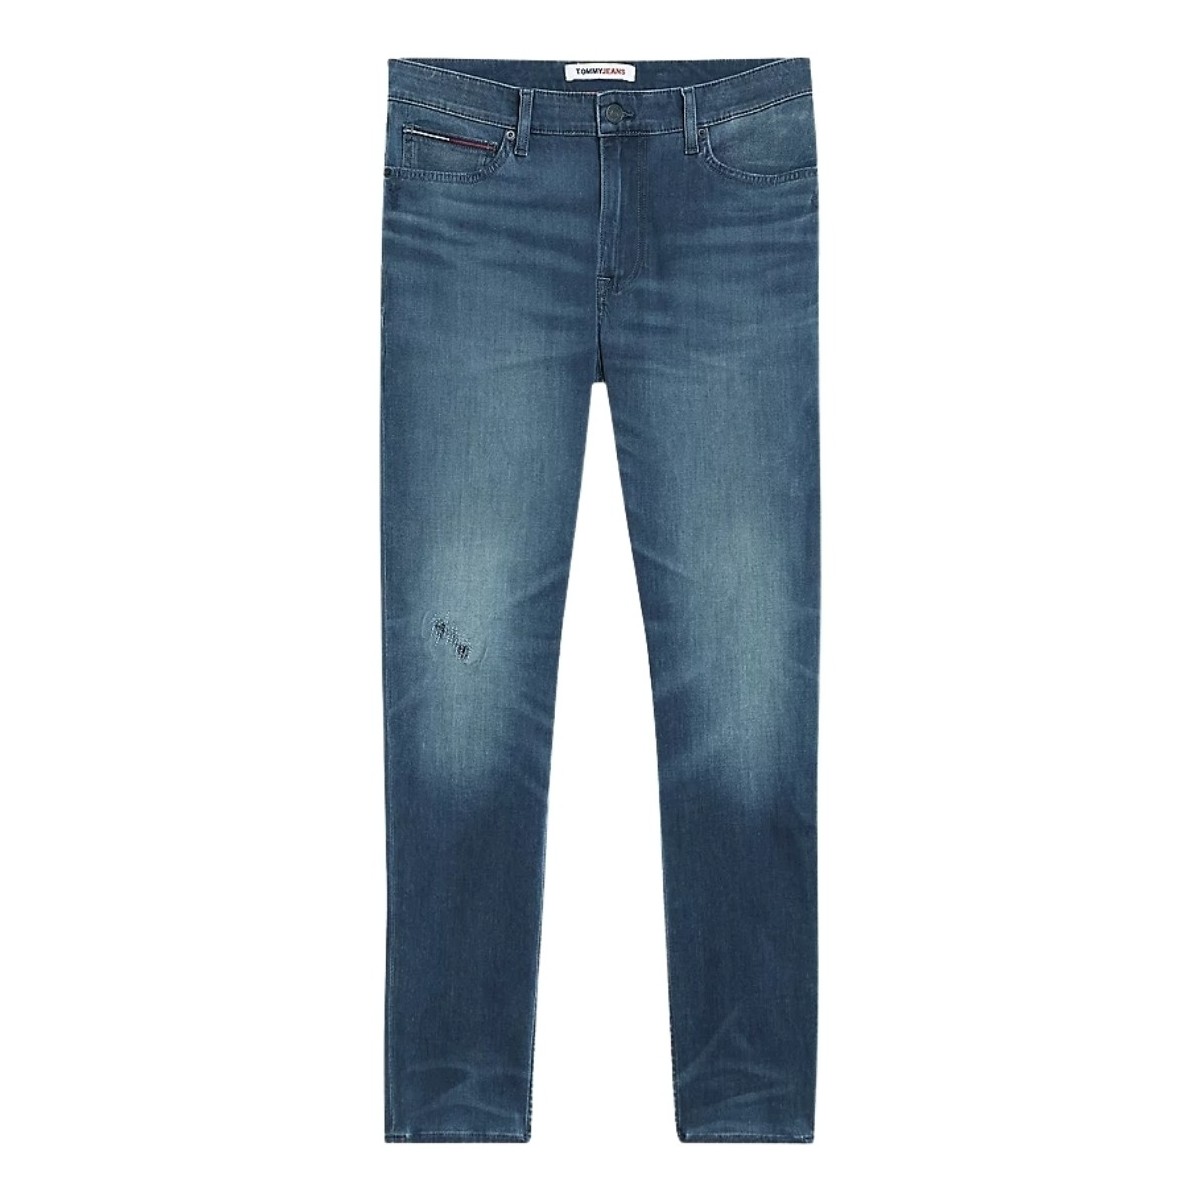 Vêtements Homme Jeans Tommy Jeans Jean skinny  Ref 54045 1BK Denim dark Bleu